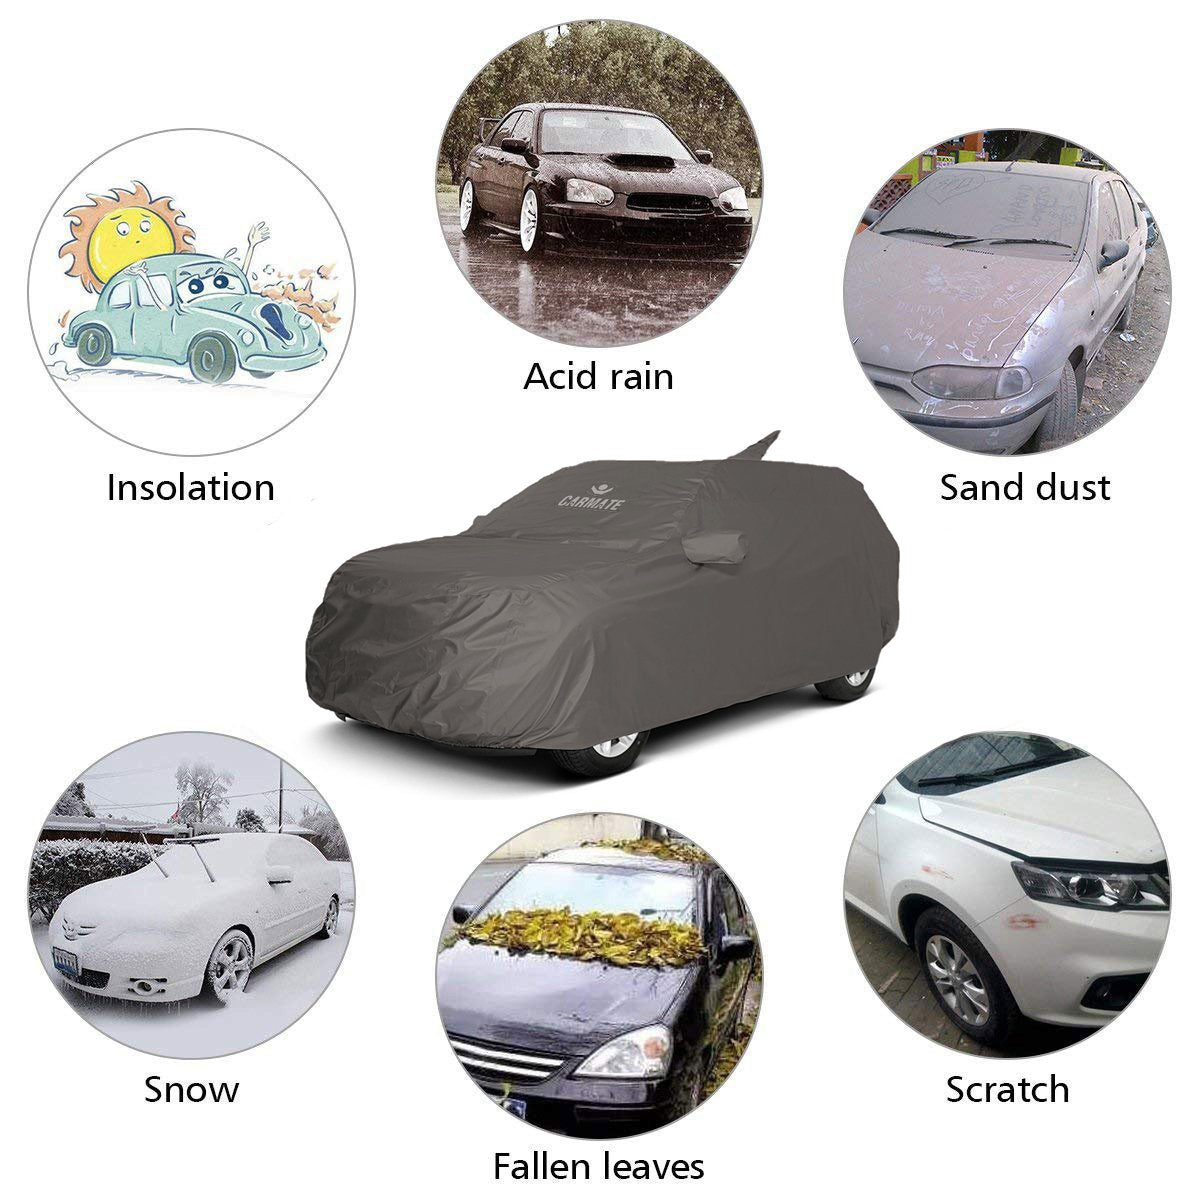 Carmate Car Body Cover 100% Waterproof Pride (Grey) for Maruti - Swift Dzire 2011 - CARMATE®